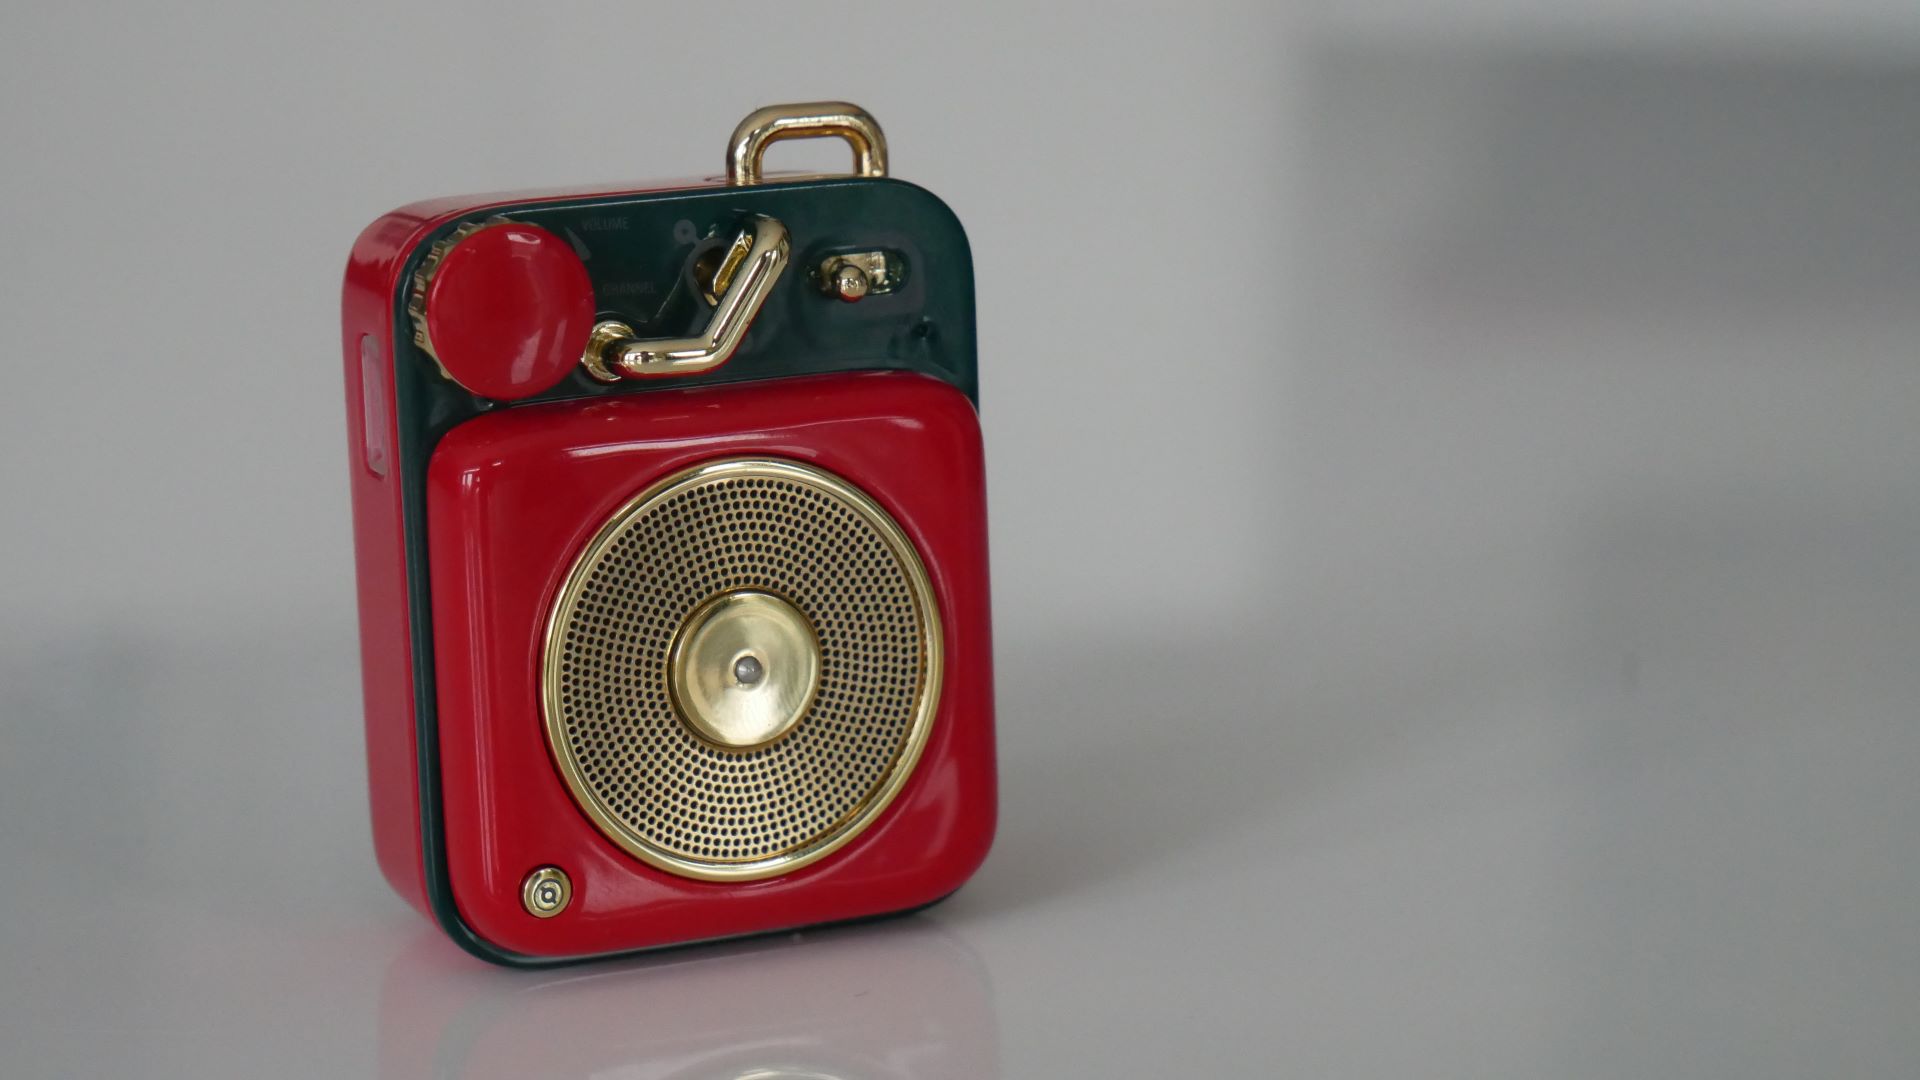 Image of Muzen Button Mini speaker red version on table